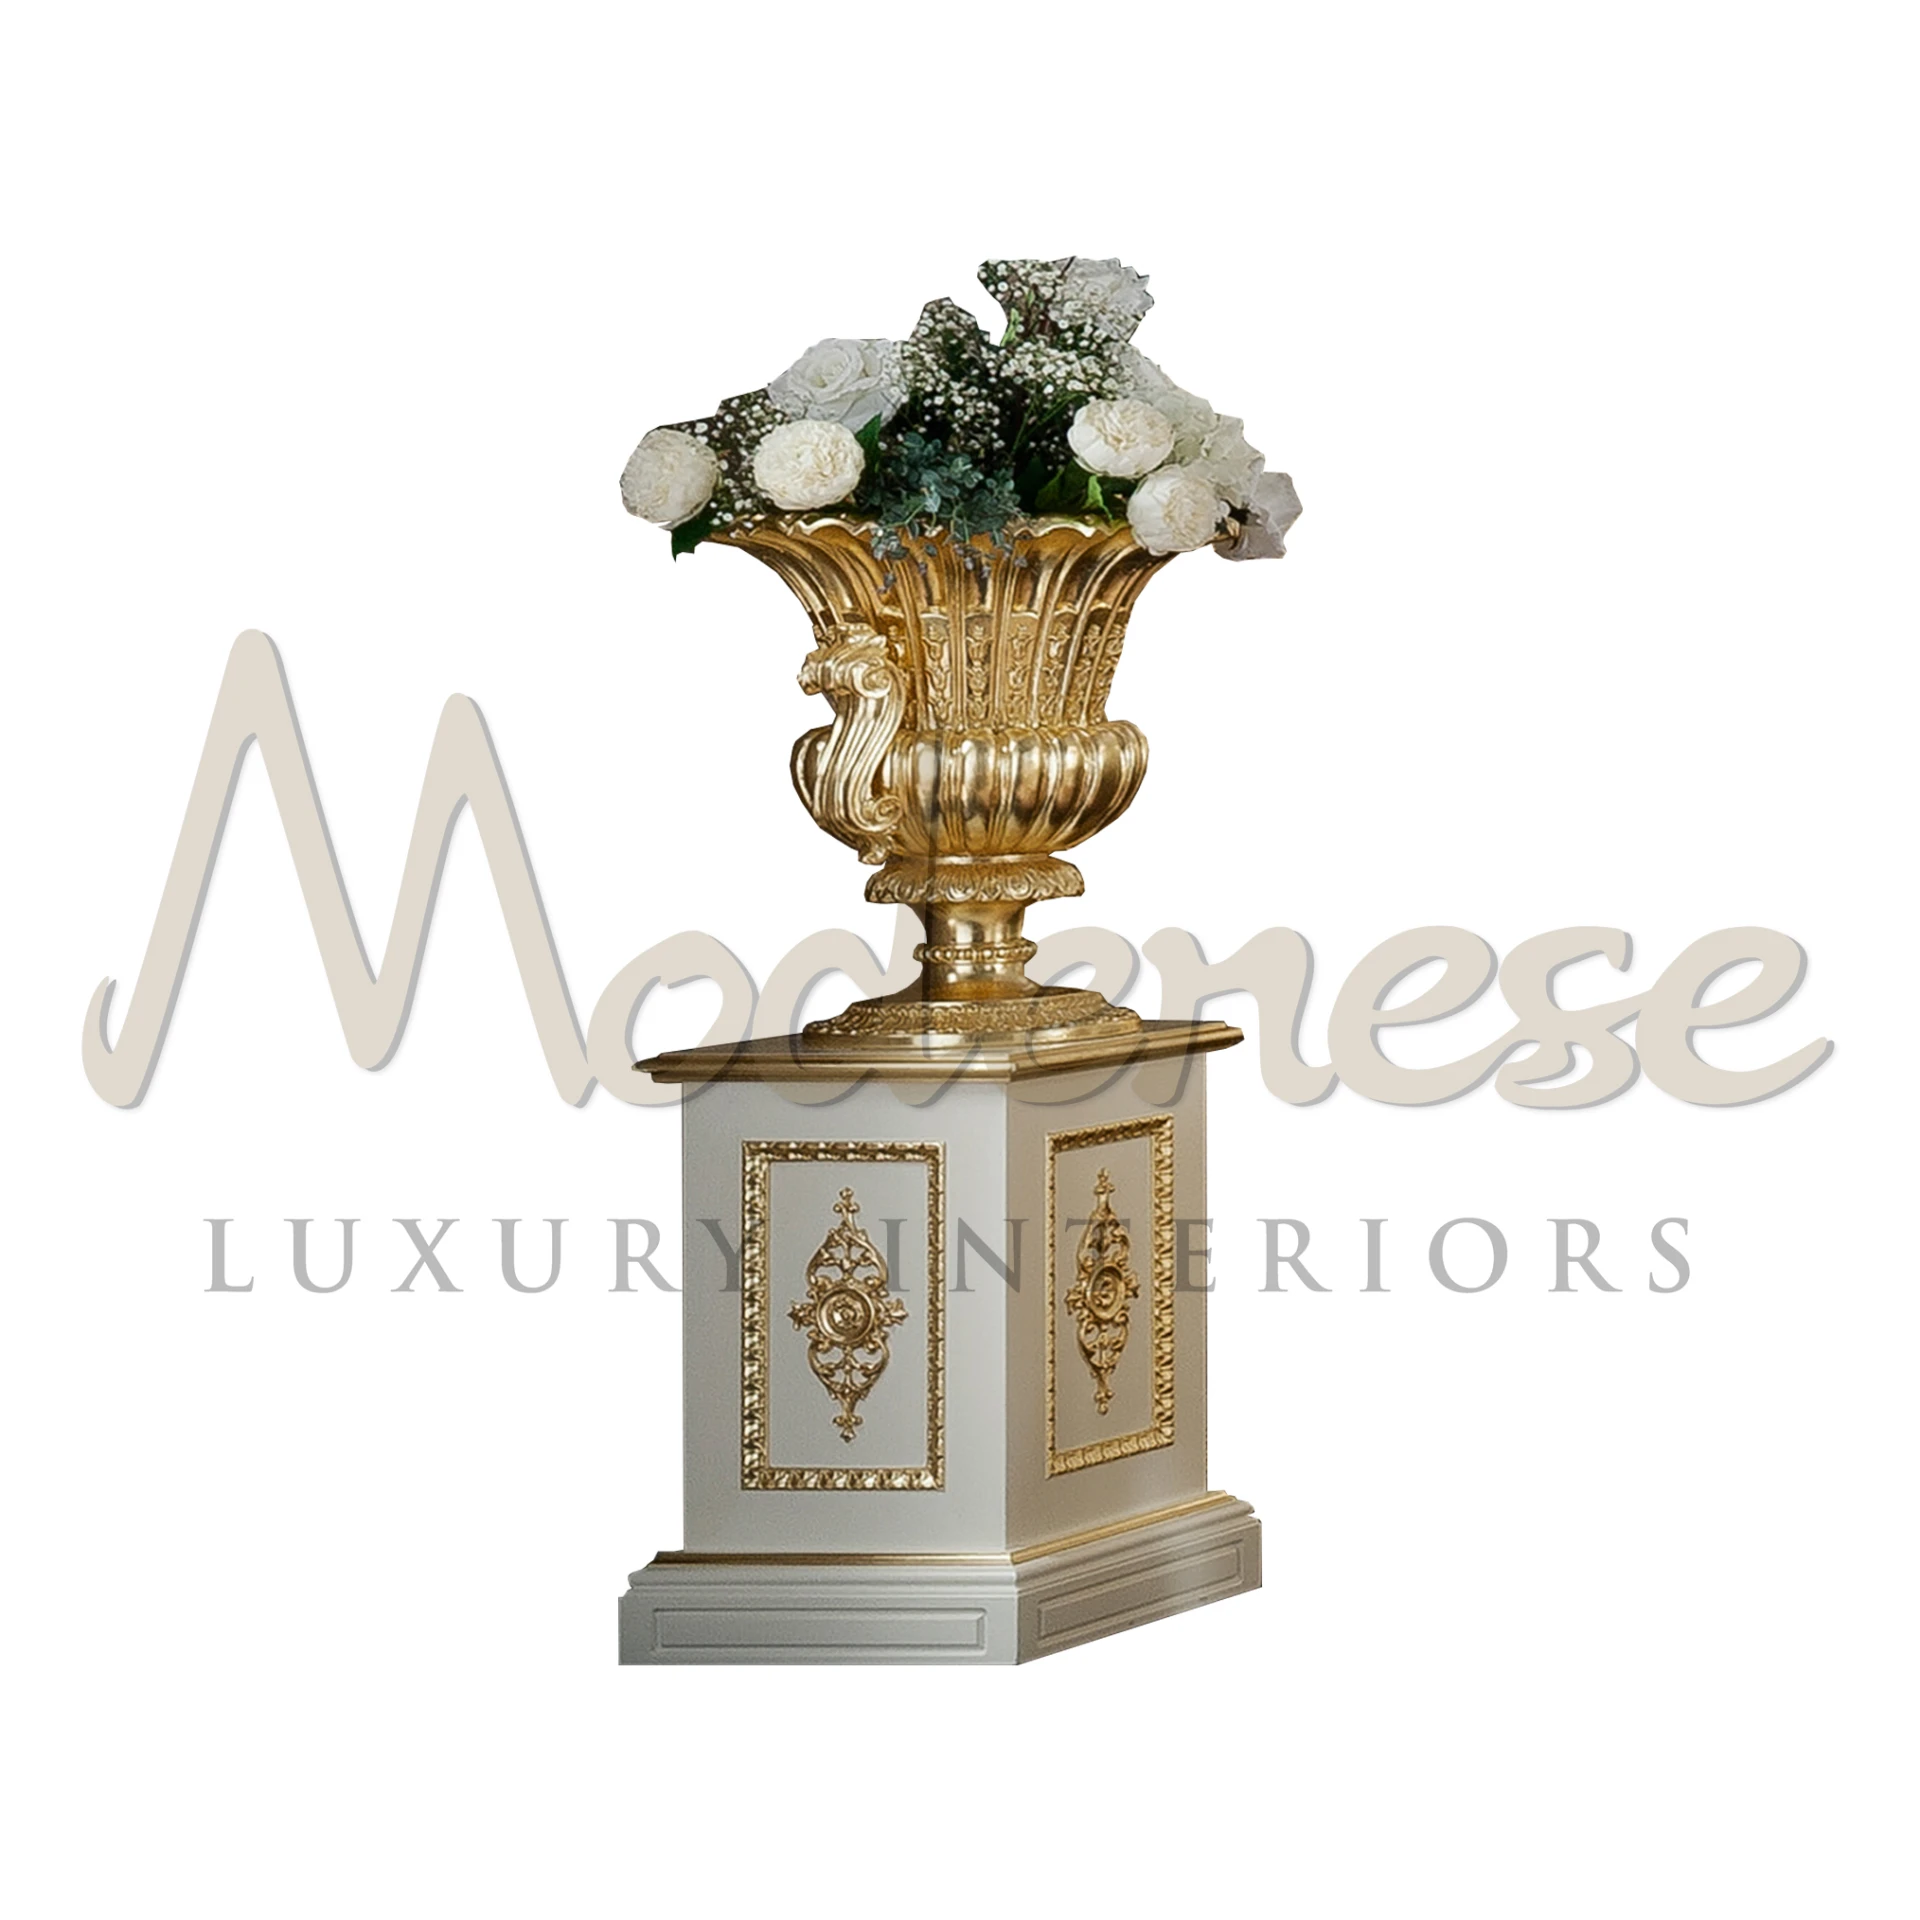 Elegant Interior Addition: Ivory and Gold Leaf Box Column Vase Stand
